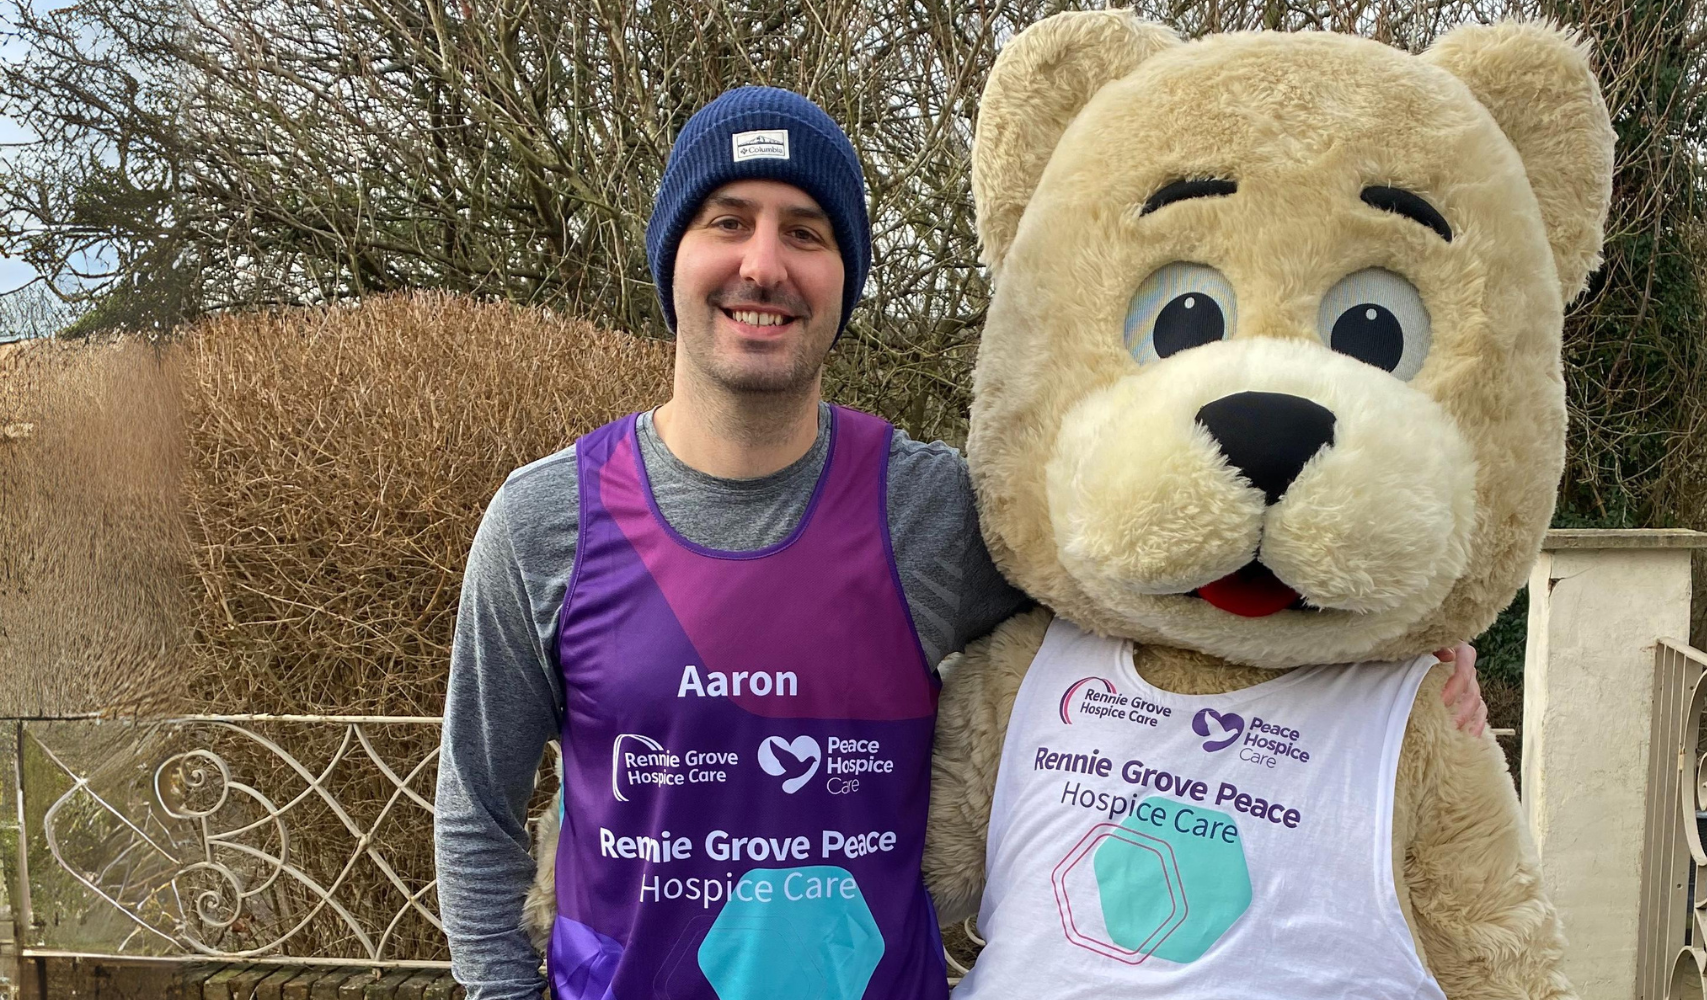 A Marathon for Aaron